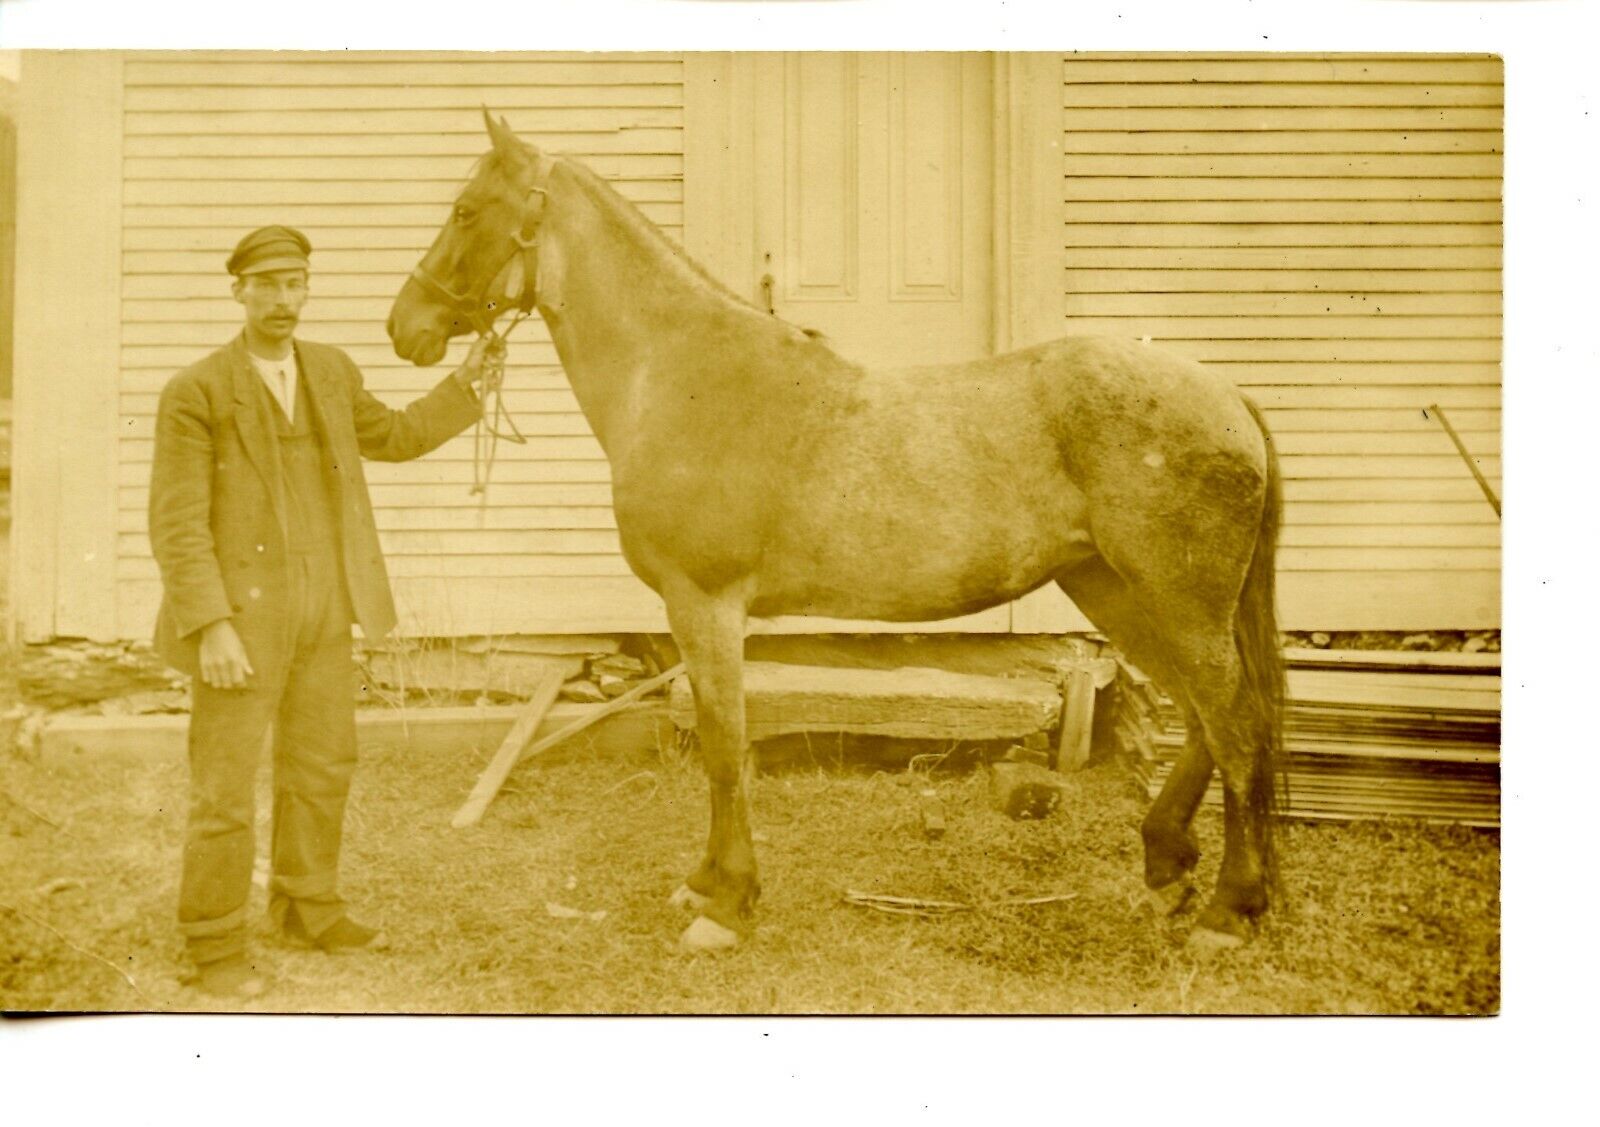 Named Man w/ Horse-Alburg-now Alburgh-Vermont-Vintage RPPC Real Photo Postcard